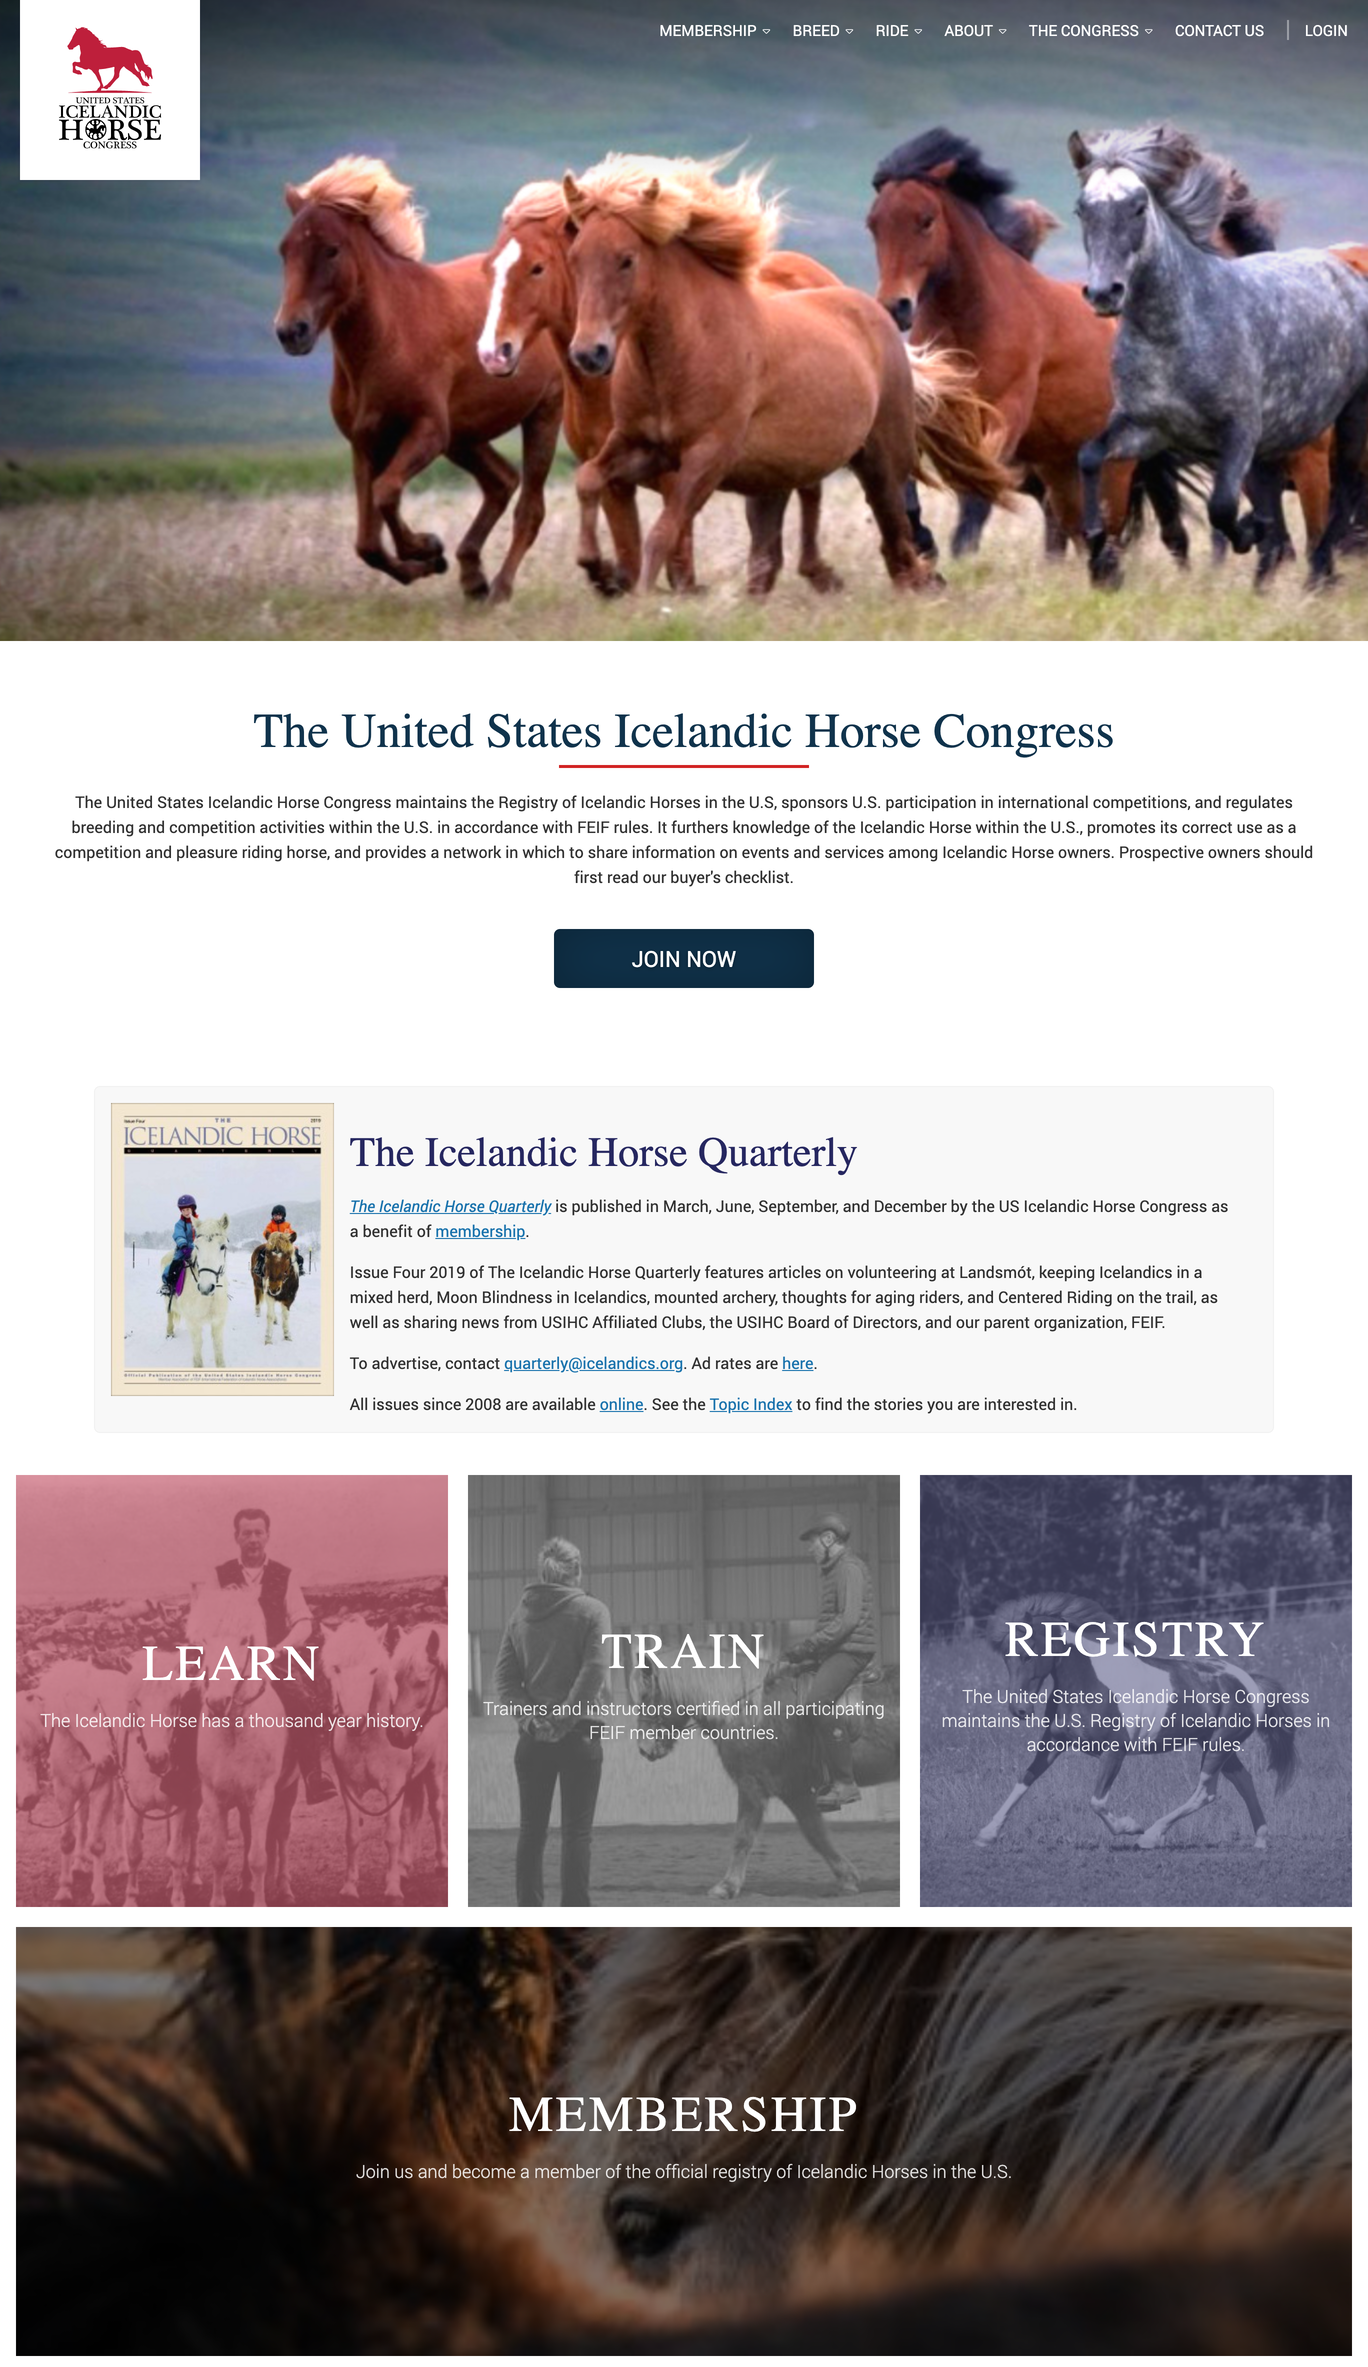 The United States Icelandic Horse Congress